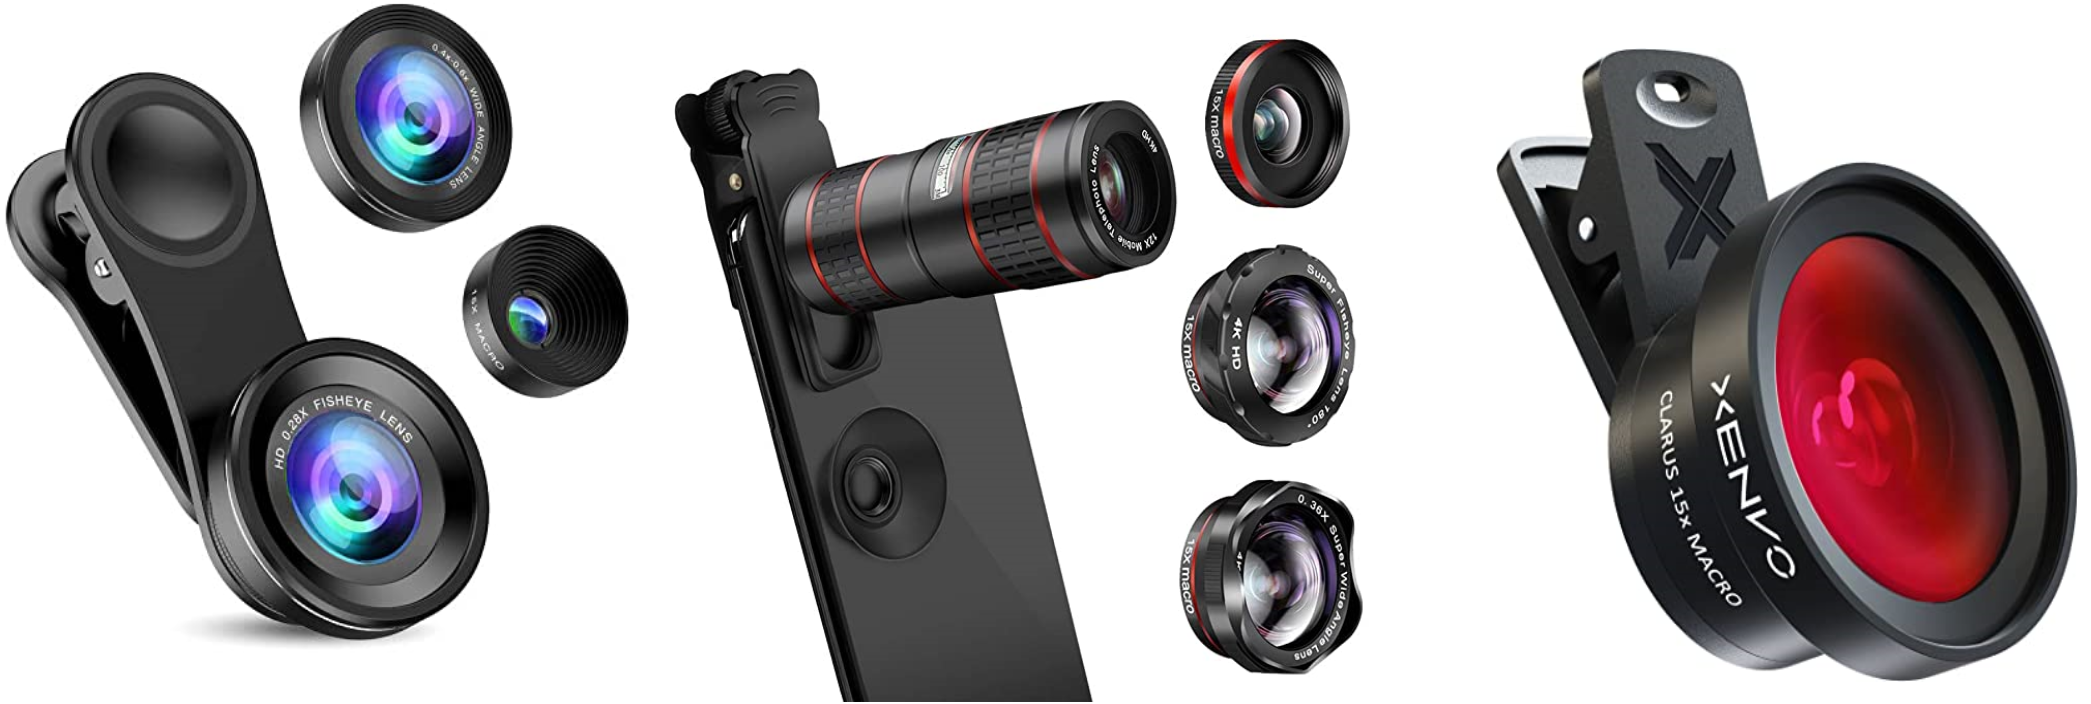 phone camera lens